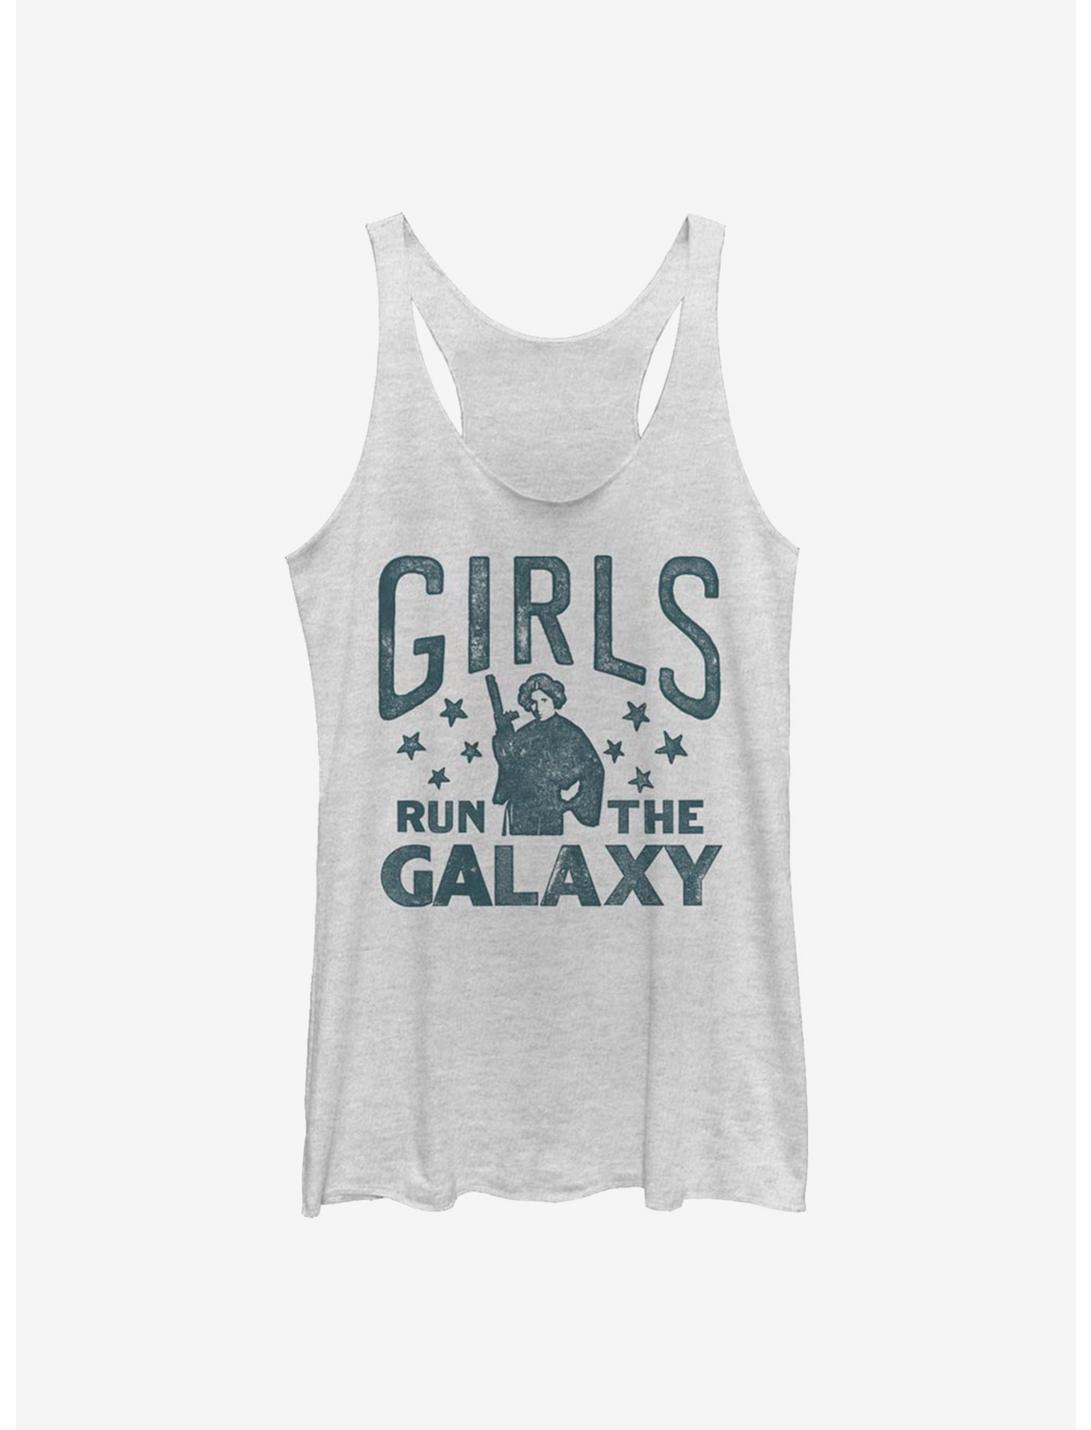 Star Wars Girls Run The Galaxy Womens Tank Top, WHITE HTR, hi-res